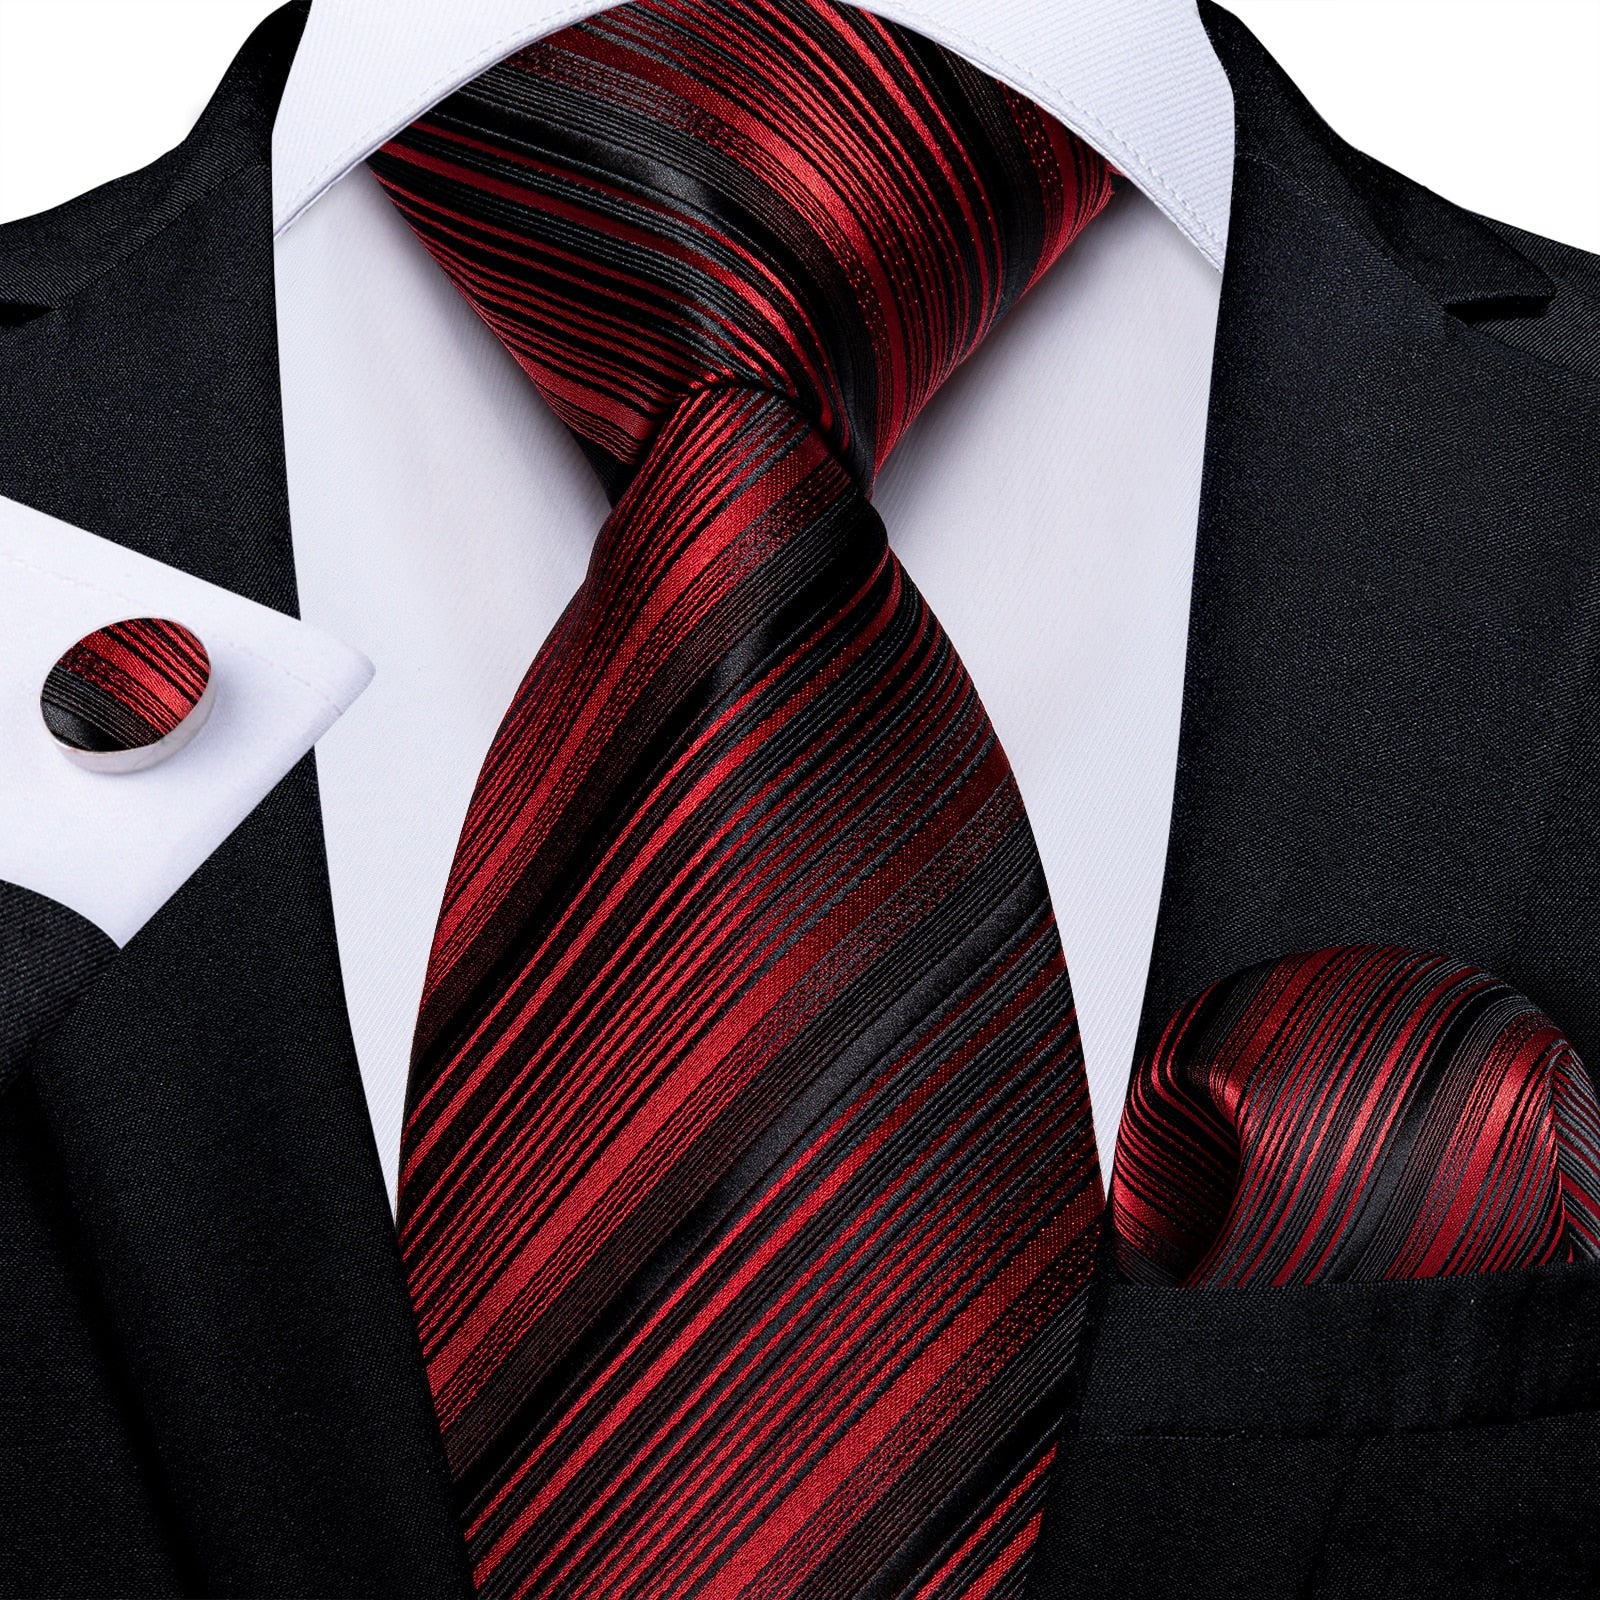 Designer Wedding Men's Tie Red  Solid Striped Paisley Neckties For Men Business Hanky Cufflinks Tie Set The Clothing Company Sydney